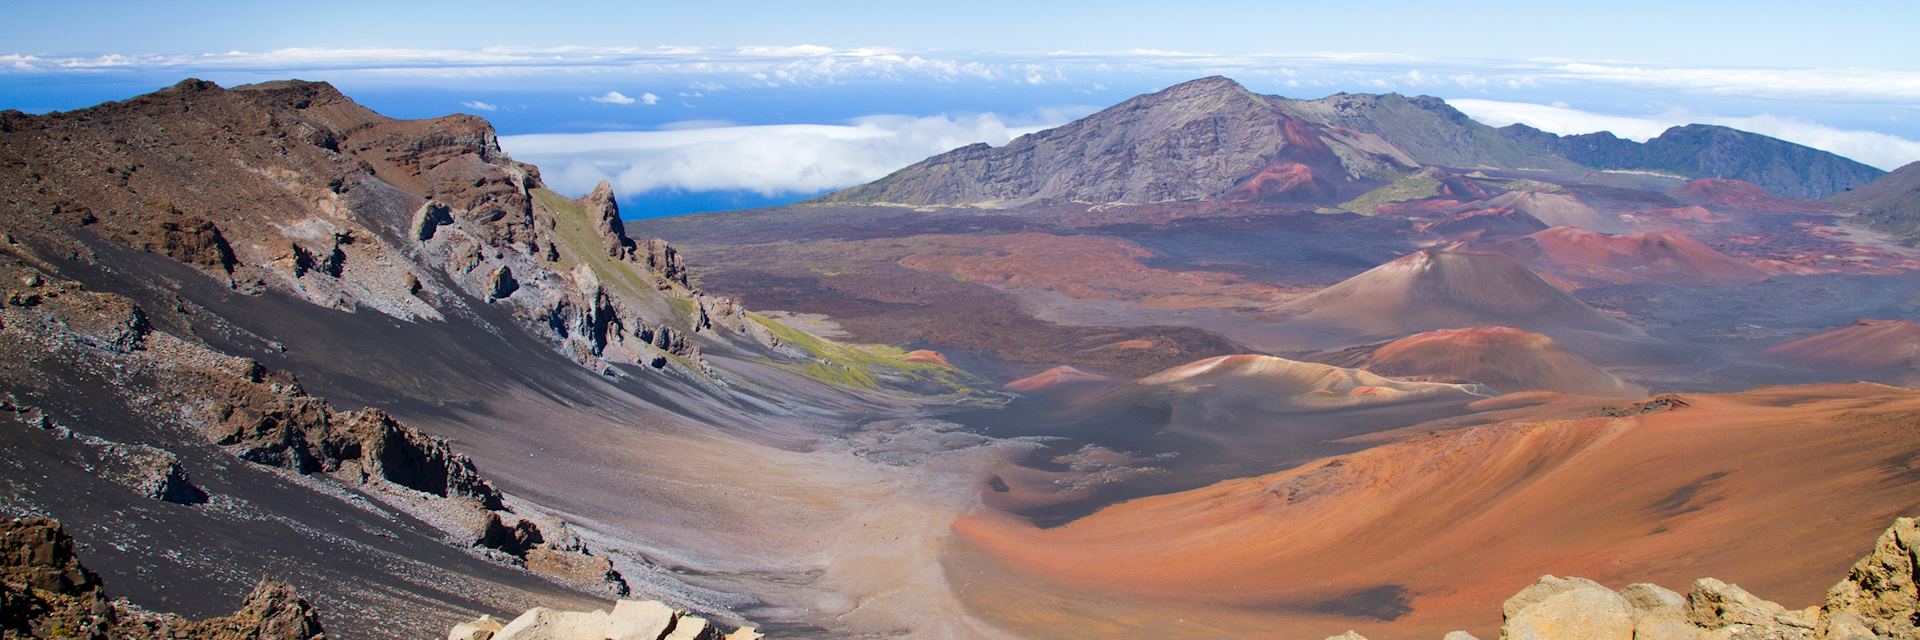 Haleakala volcano in Maui